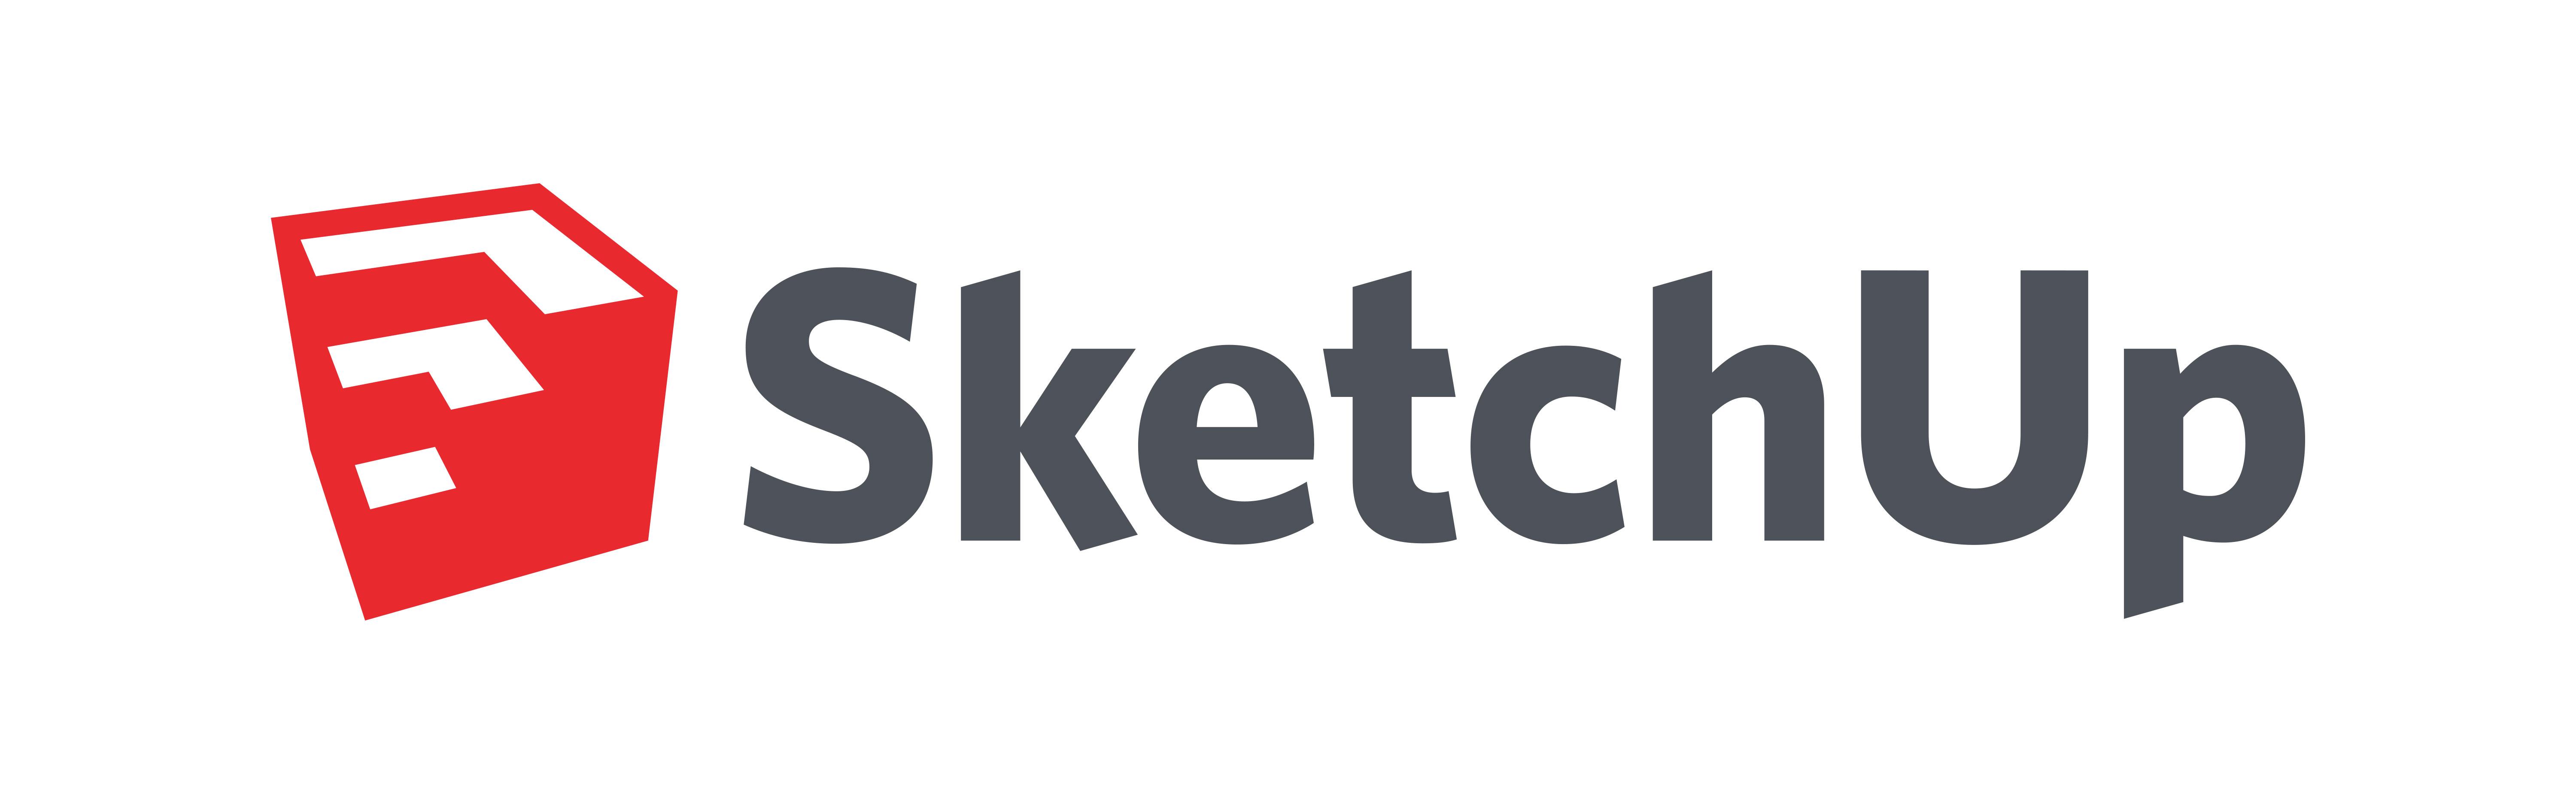 sketch up software